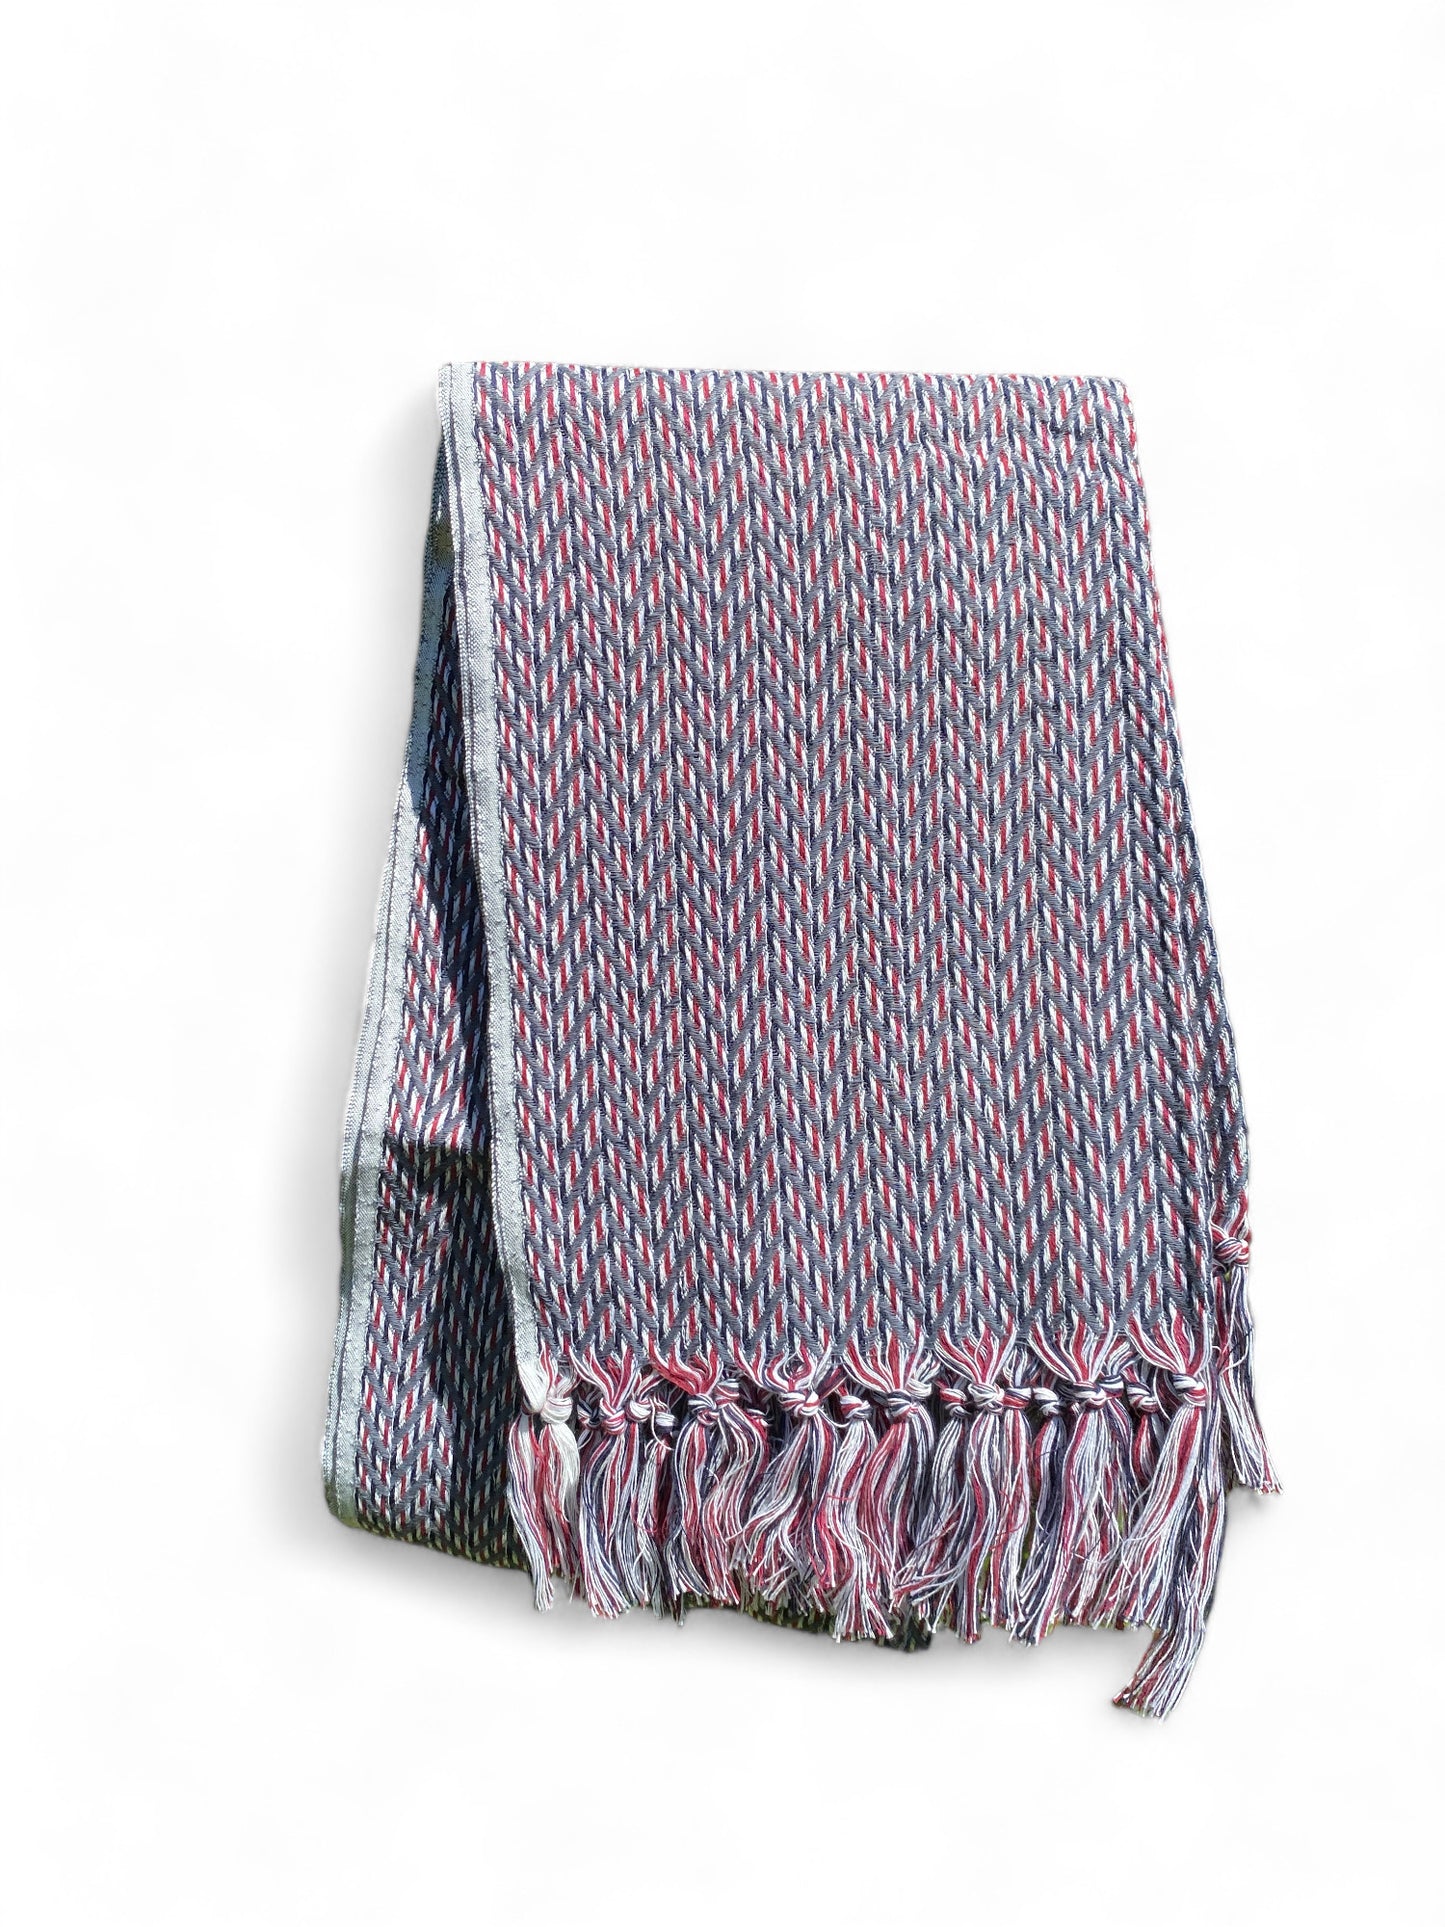 Hammam Towel (Cotton and Linen)